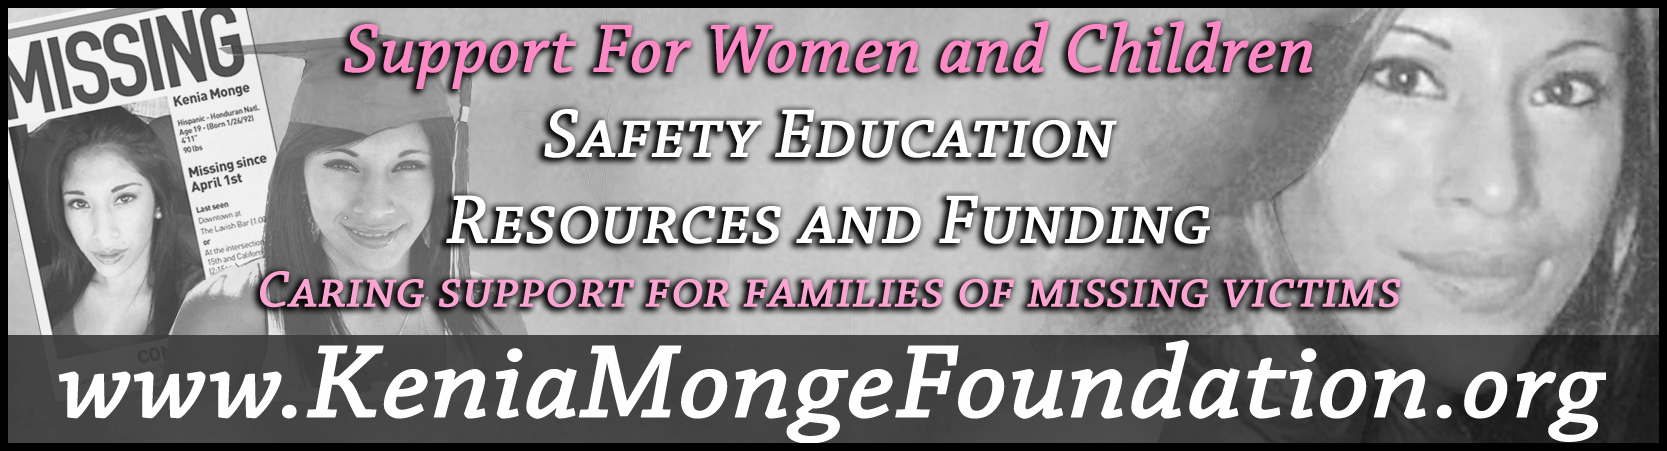 The Kenia Monge Foundation